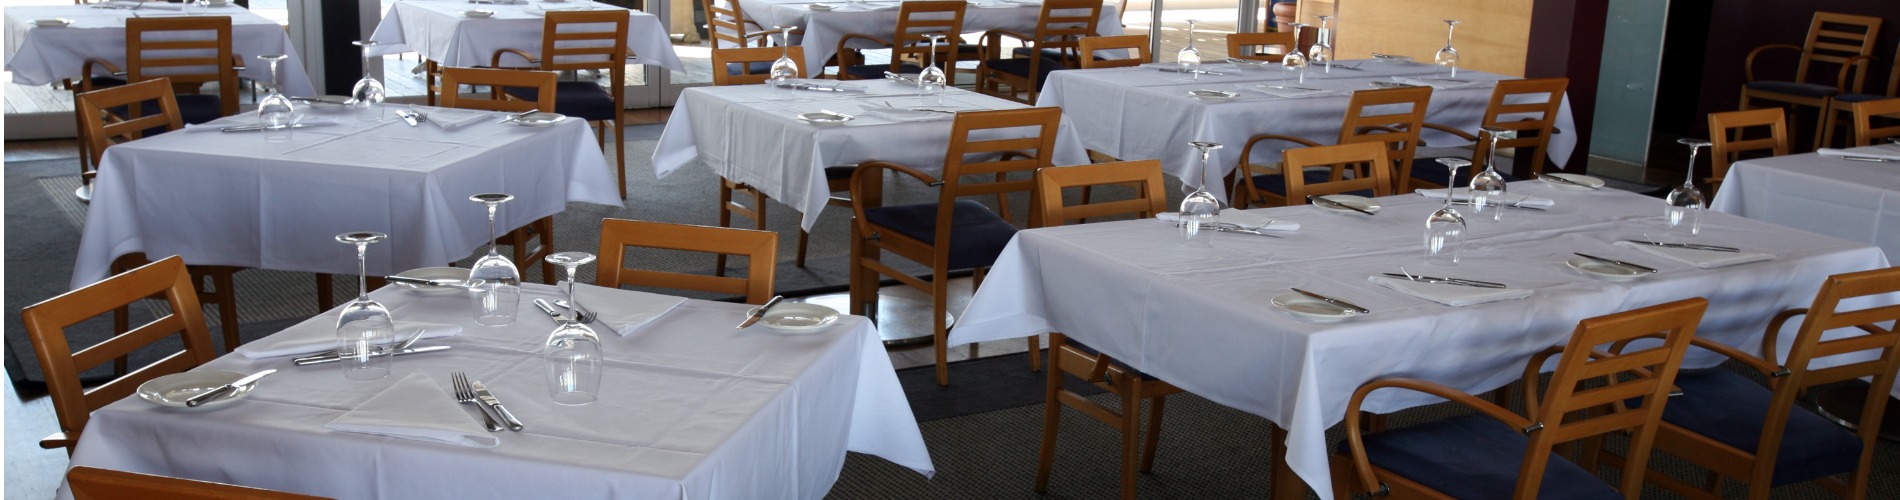 tables-set-for-lunch-or-dinner.jpg-1900x500